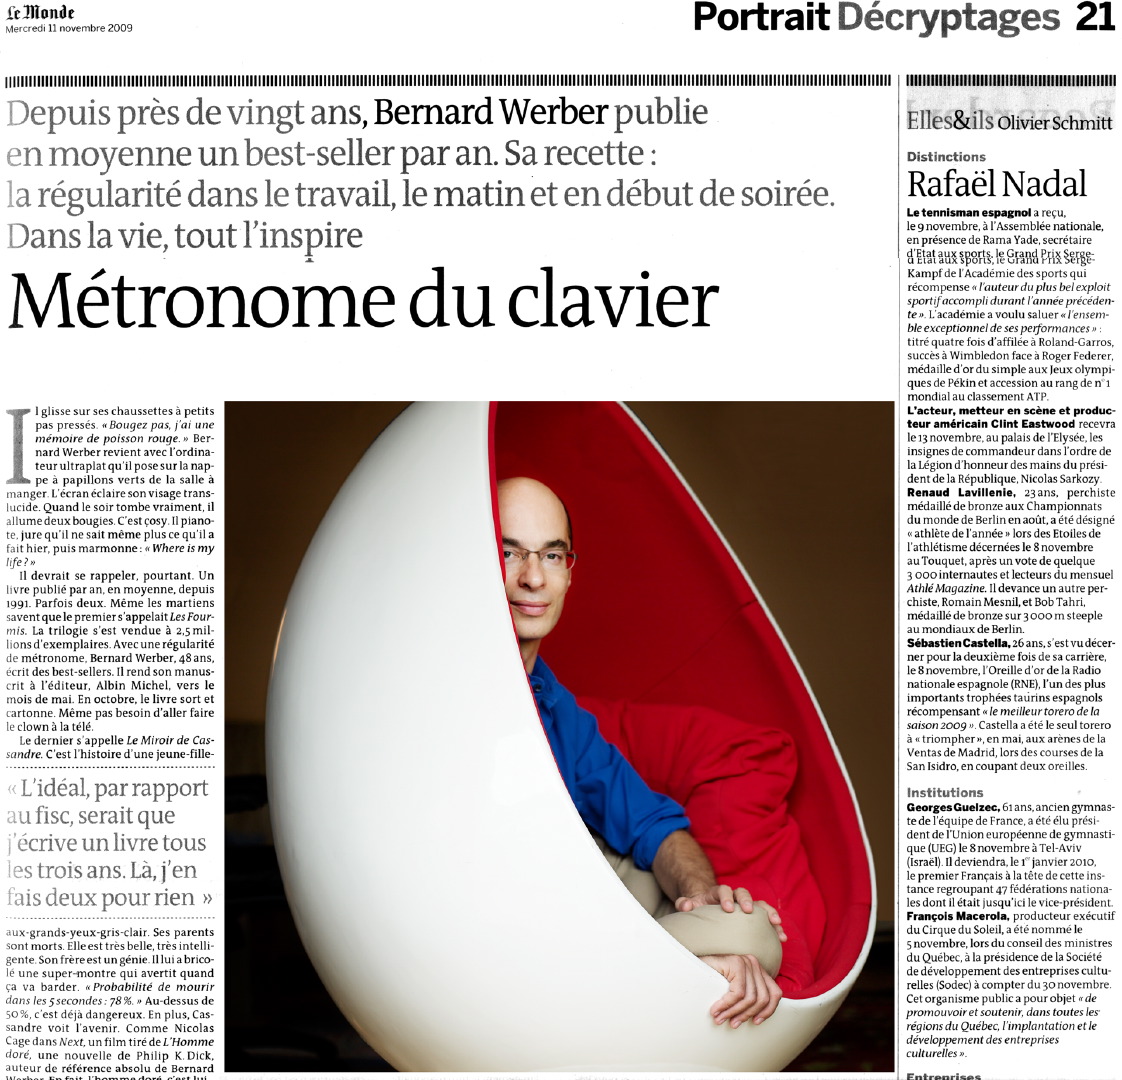 Thibault Stipal - Photographe - Bernard Werber / Le Monde - 1